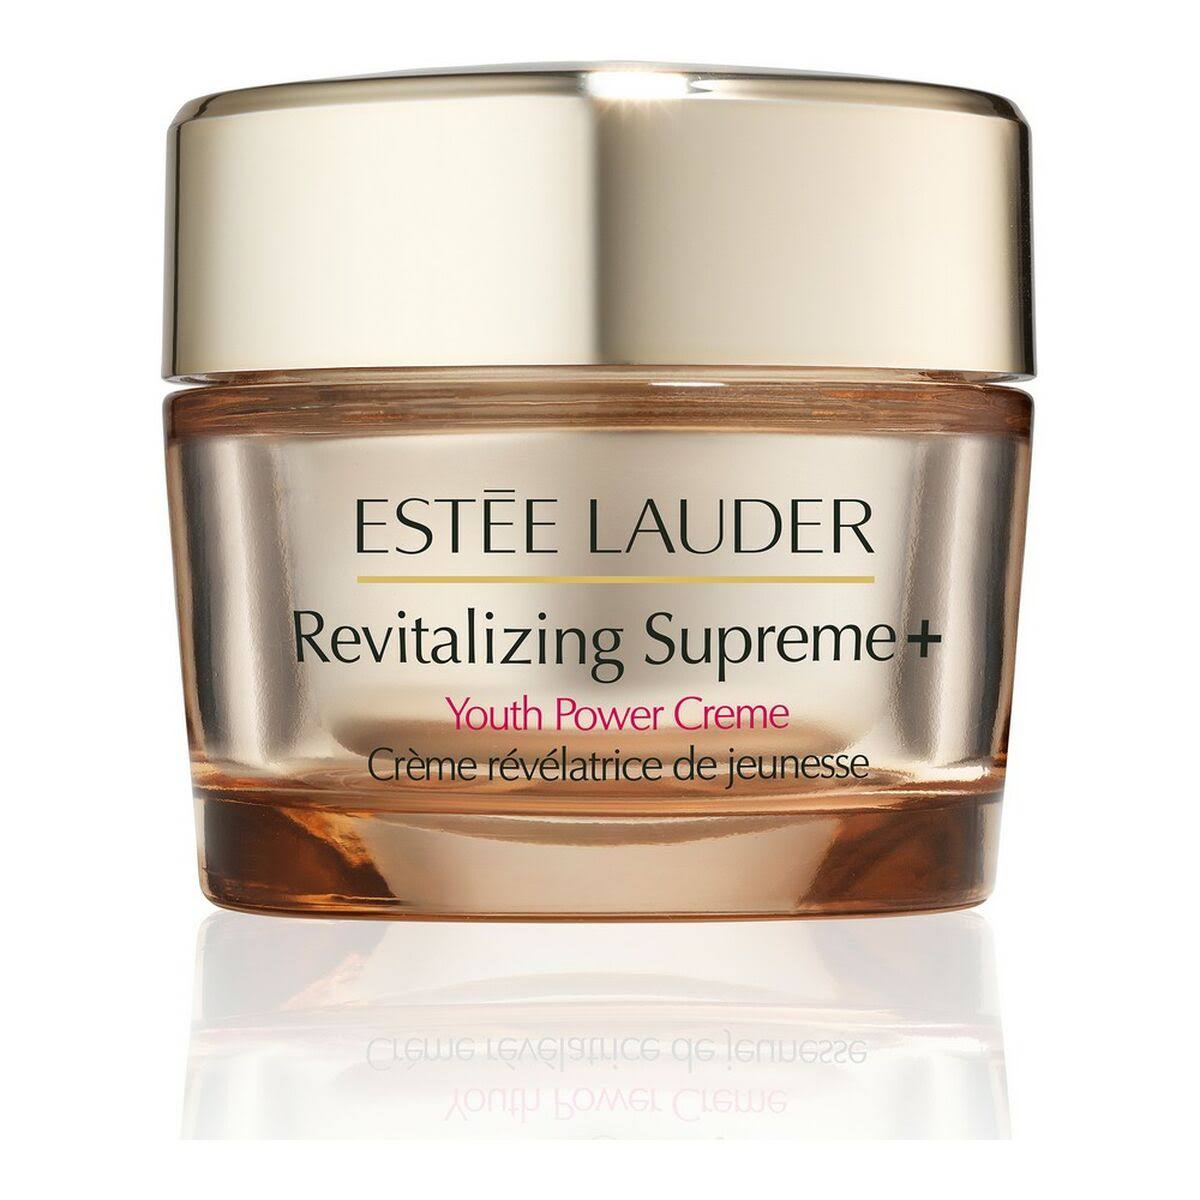 Estee Lauder Revitalizing Supreme+ Youth Power Creme 50ml